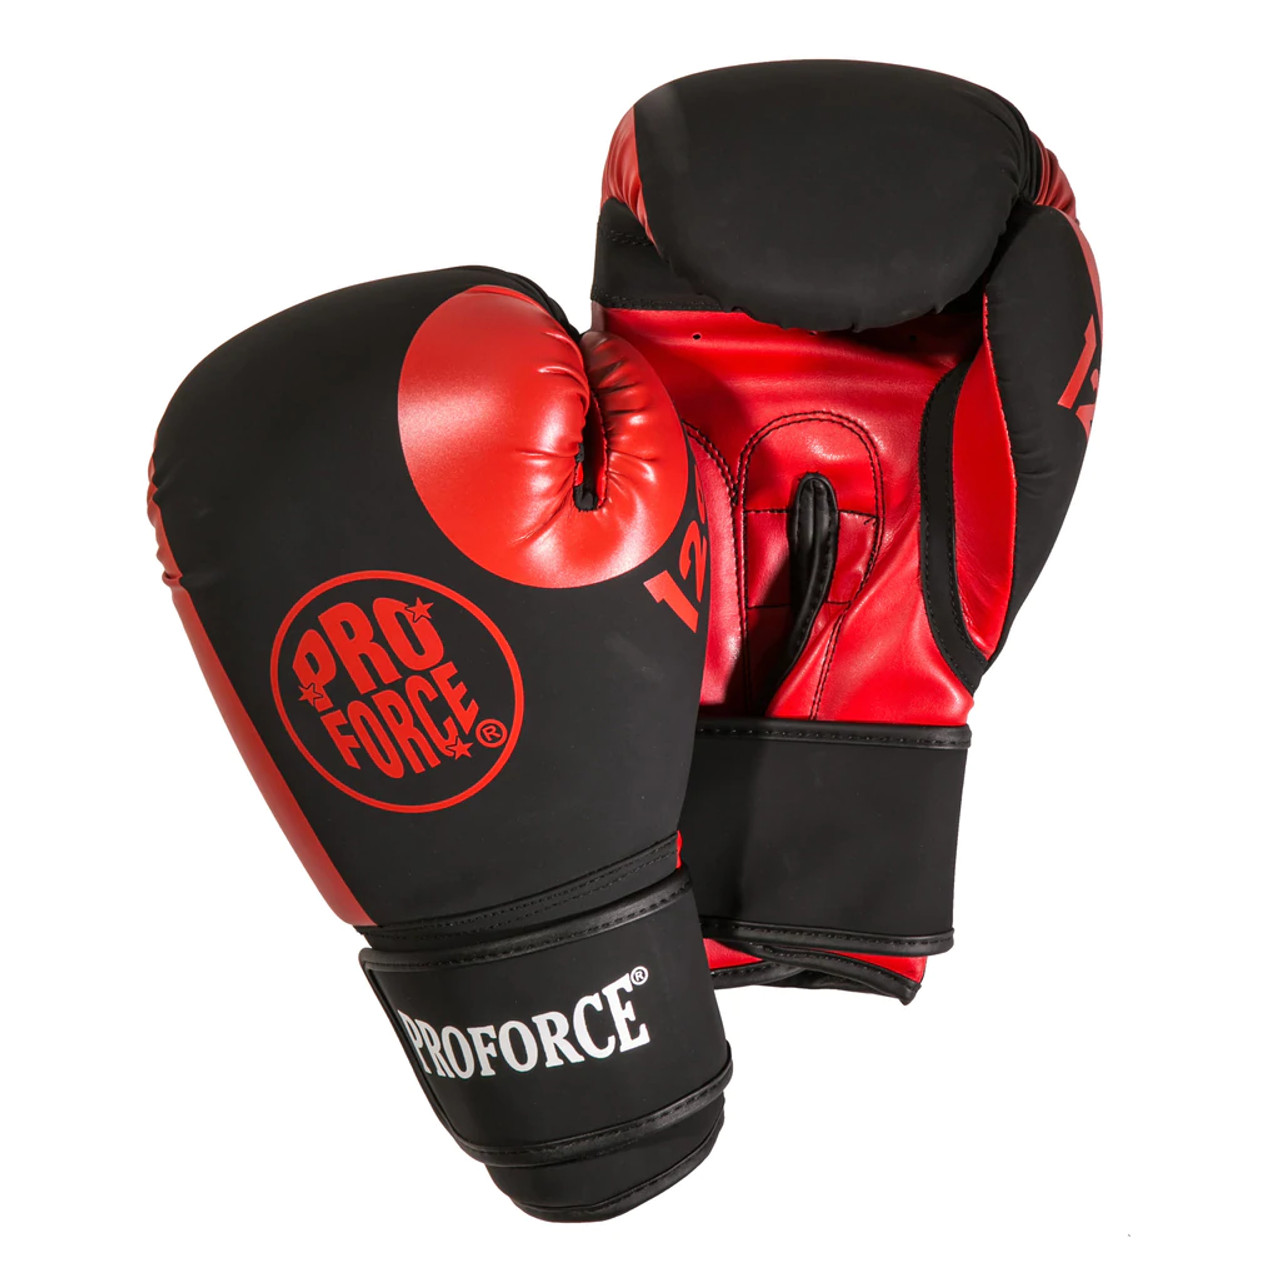 ProForce® Tactical Boxing Training Glove - 12oz.